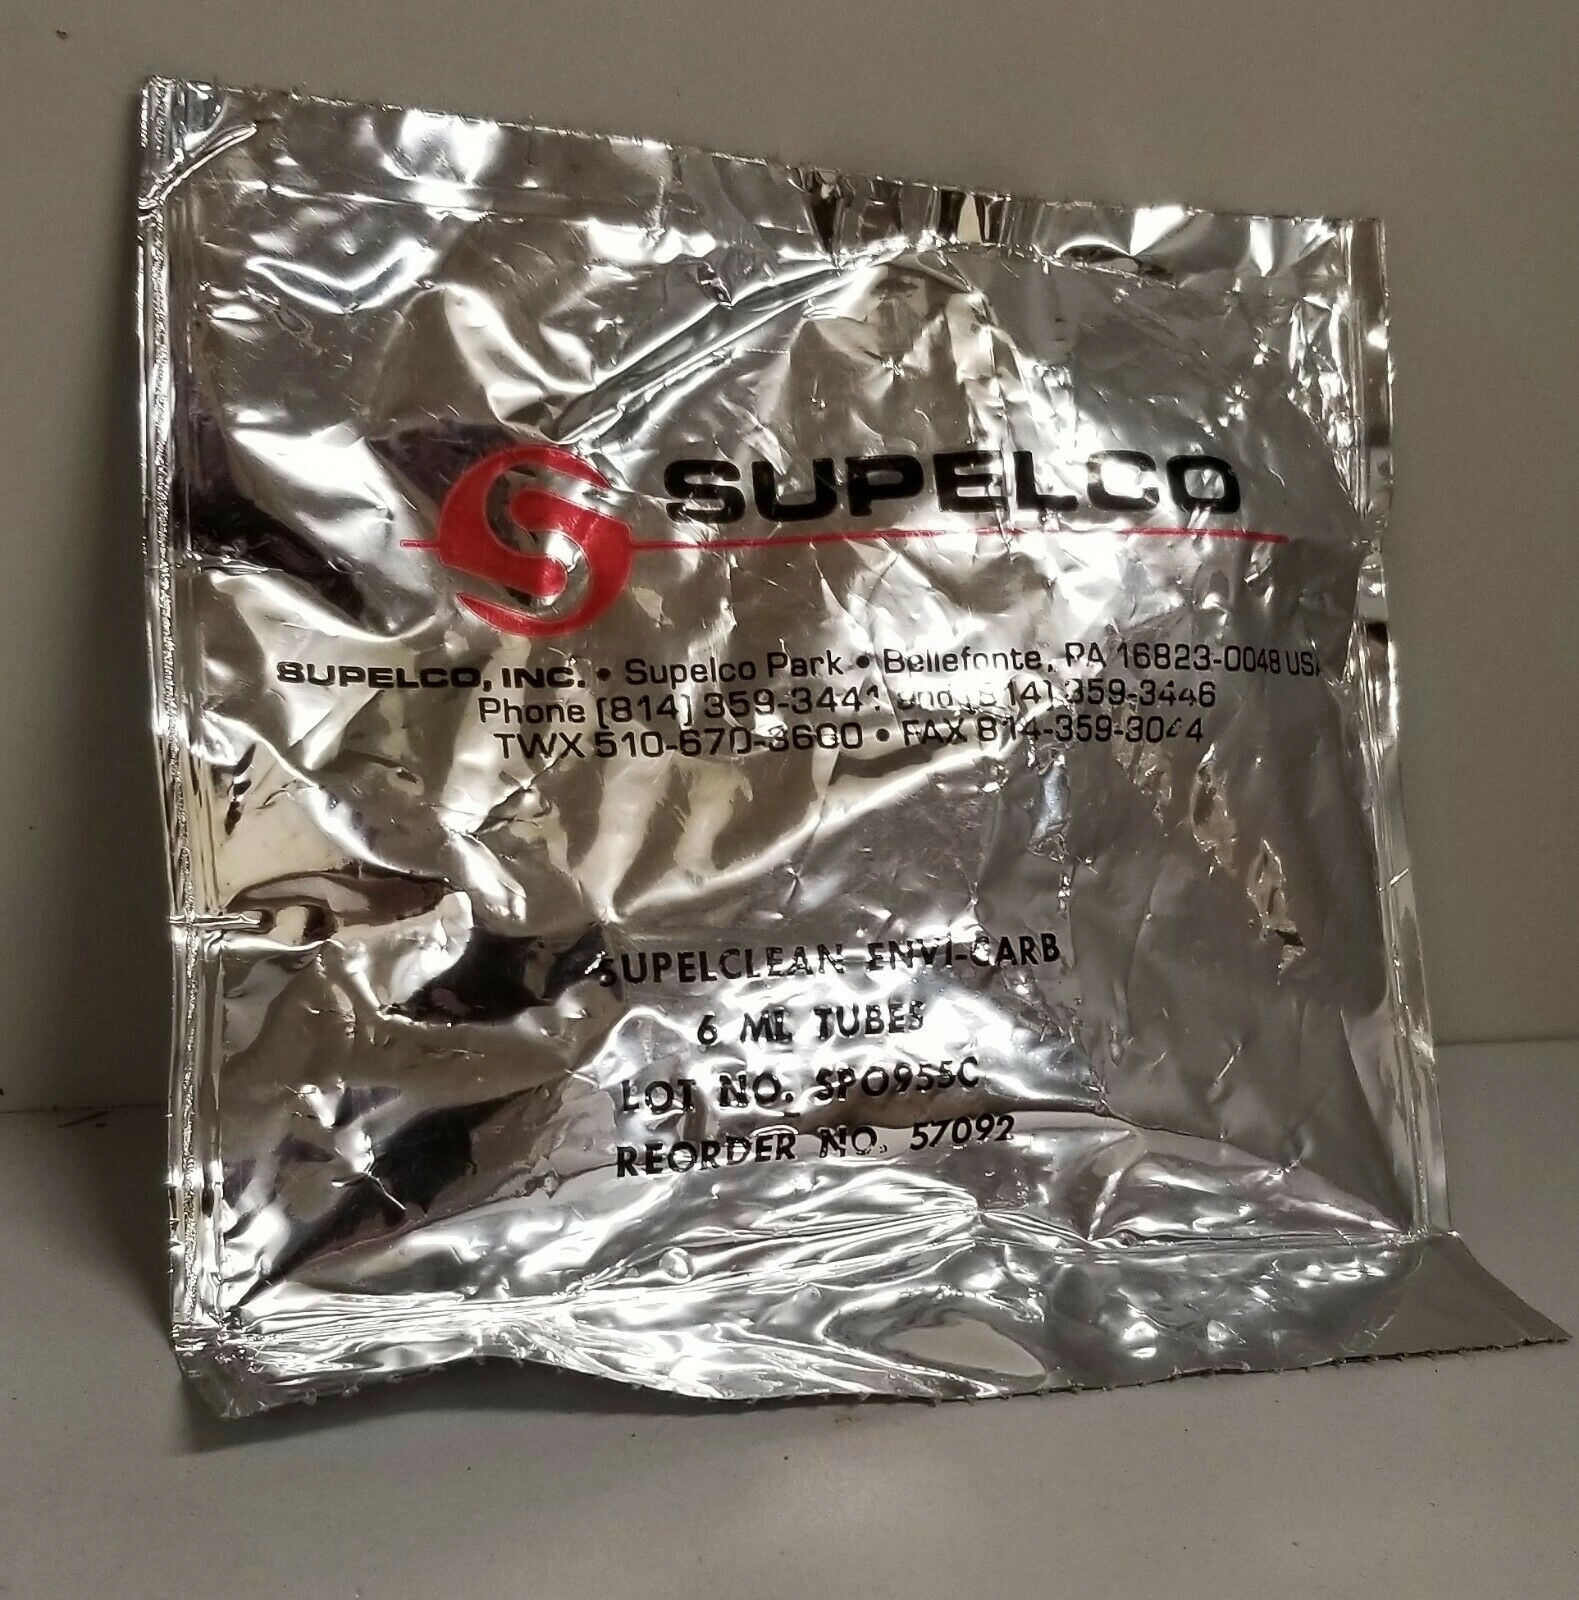 Supelco Supelclean ENVI-Carb (57092) SPE Tube (Pack of 3)